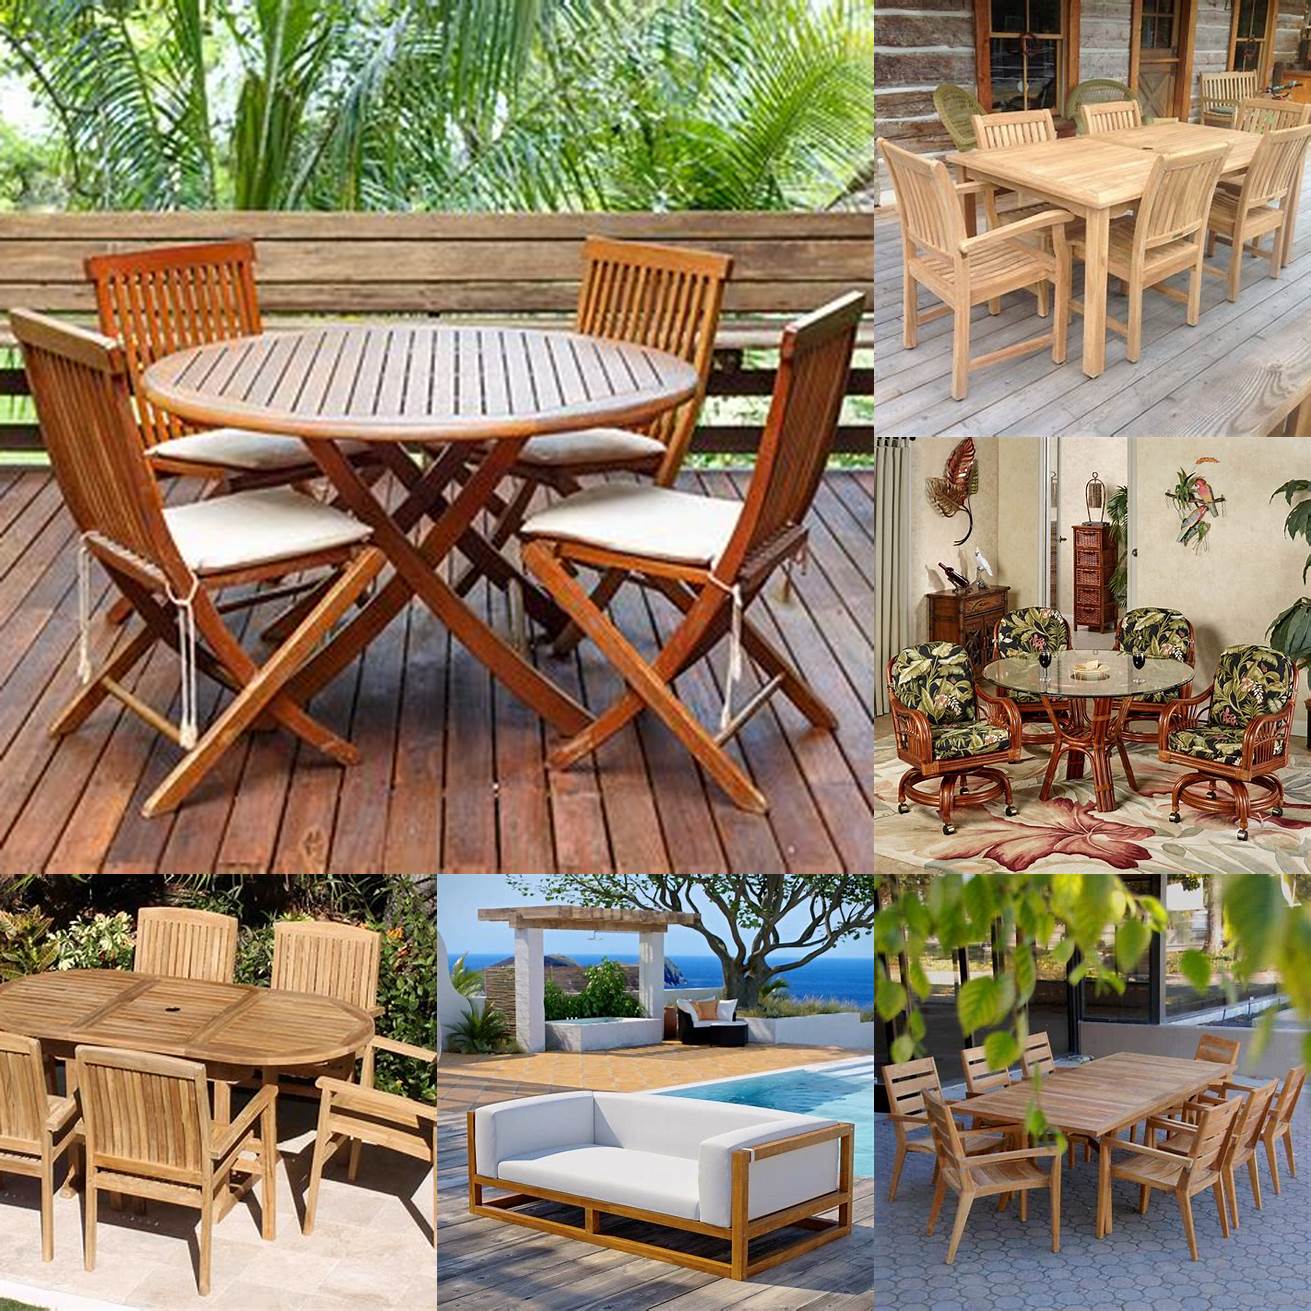 Teak furniture in a tropical setting